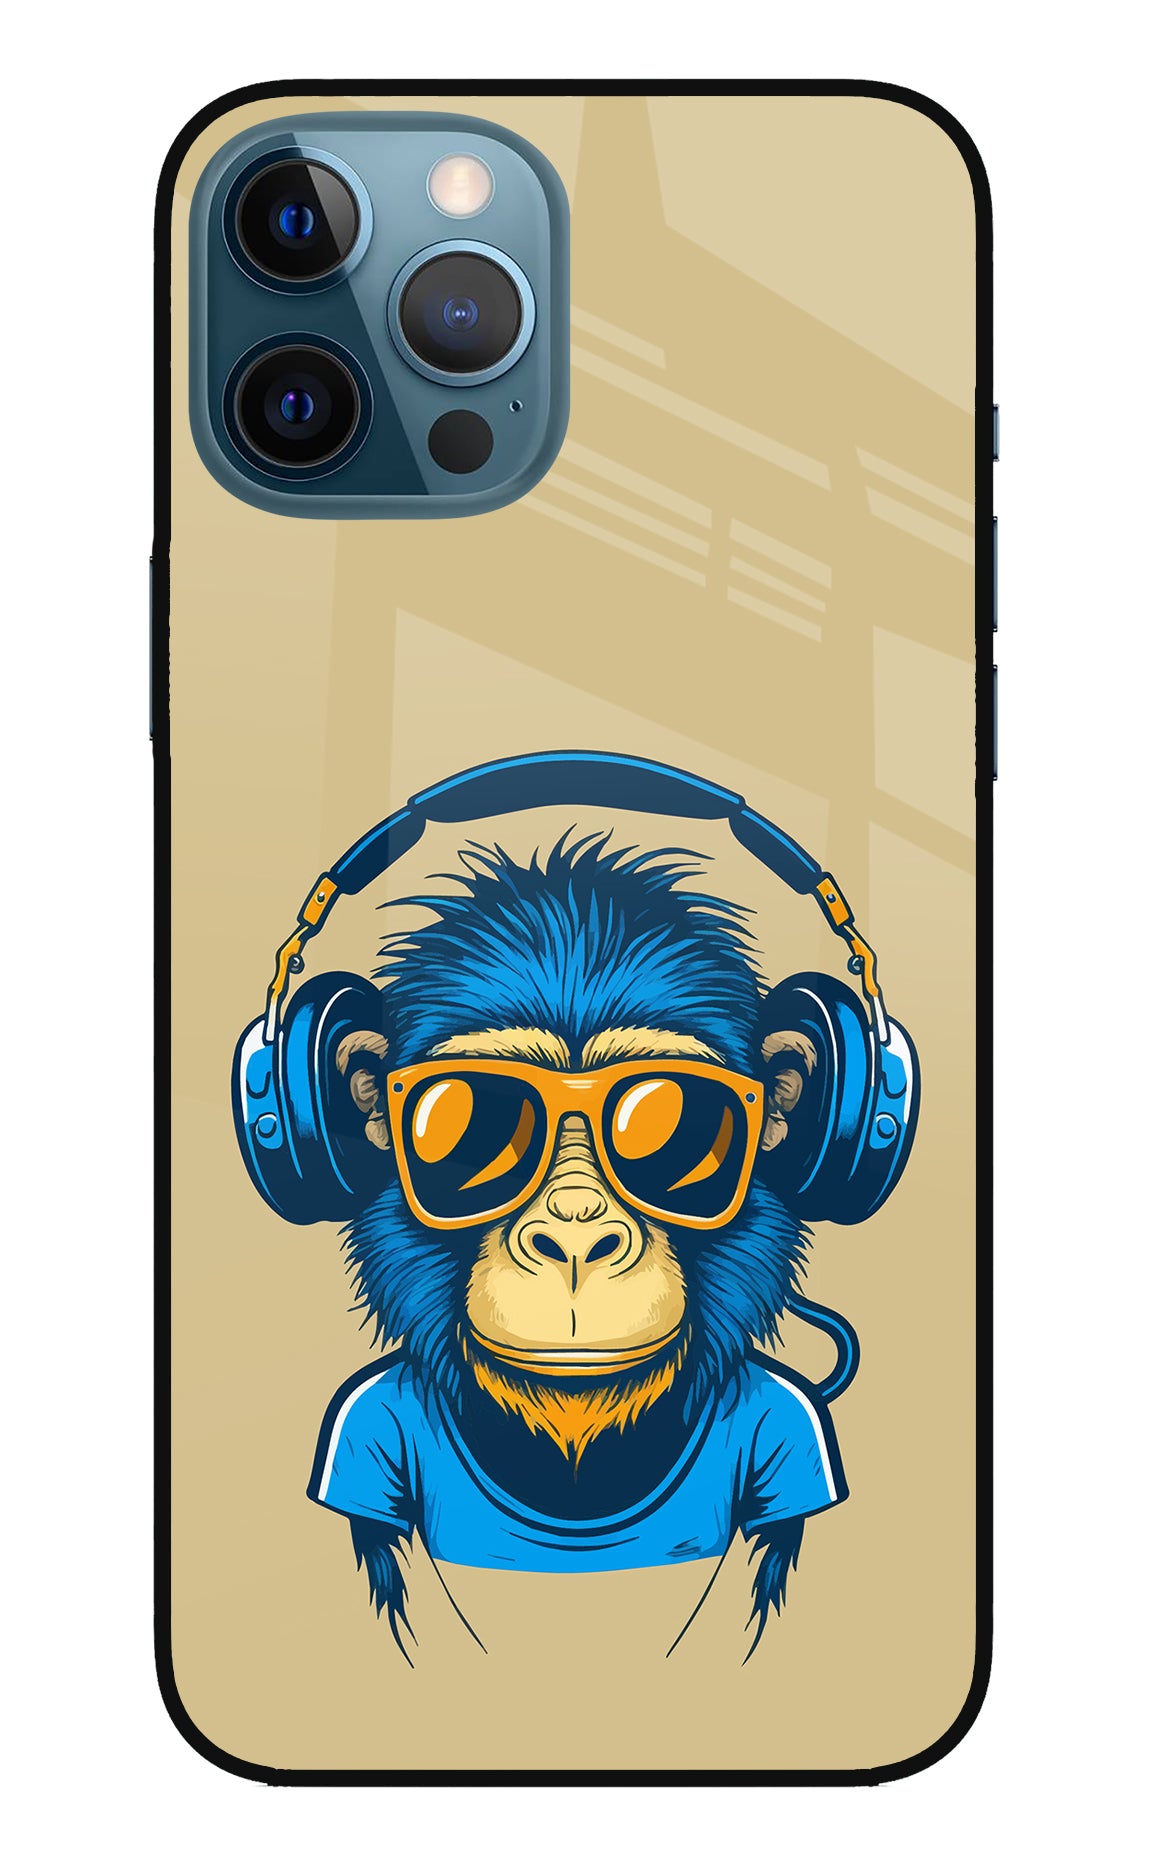 Monkey Headphone iPhone 12 Pro Max Back Cover